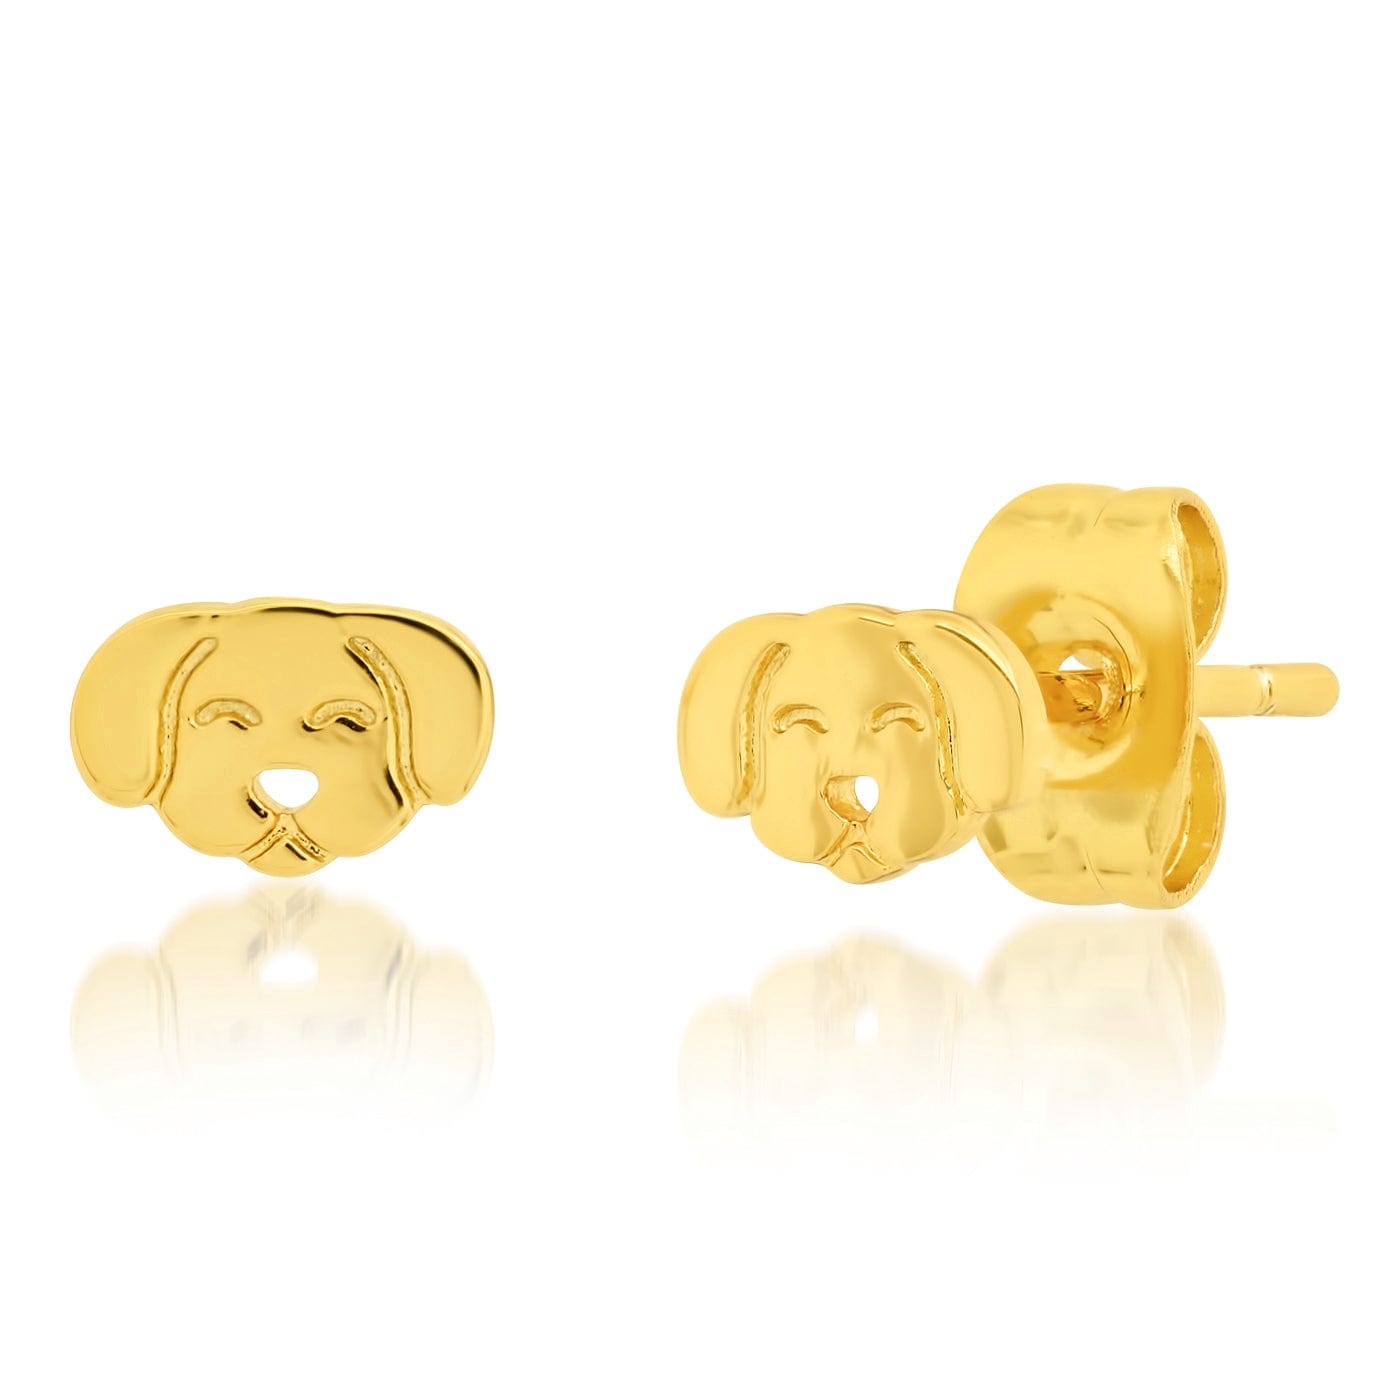 TAI JEWELRY Earrings Whimsical Gold Dog Studs